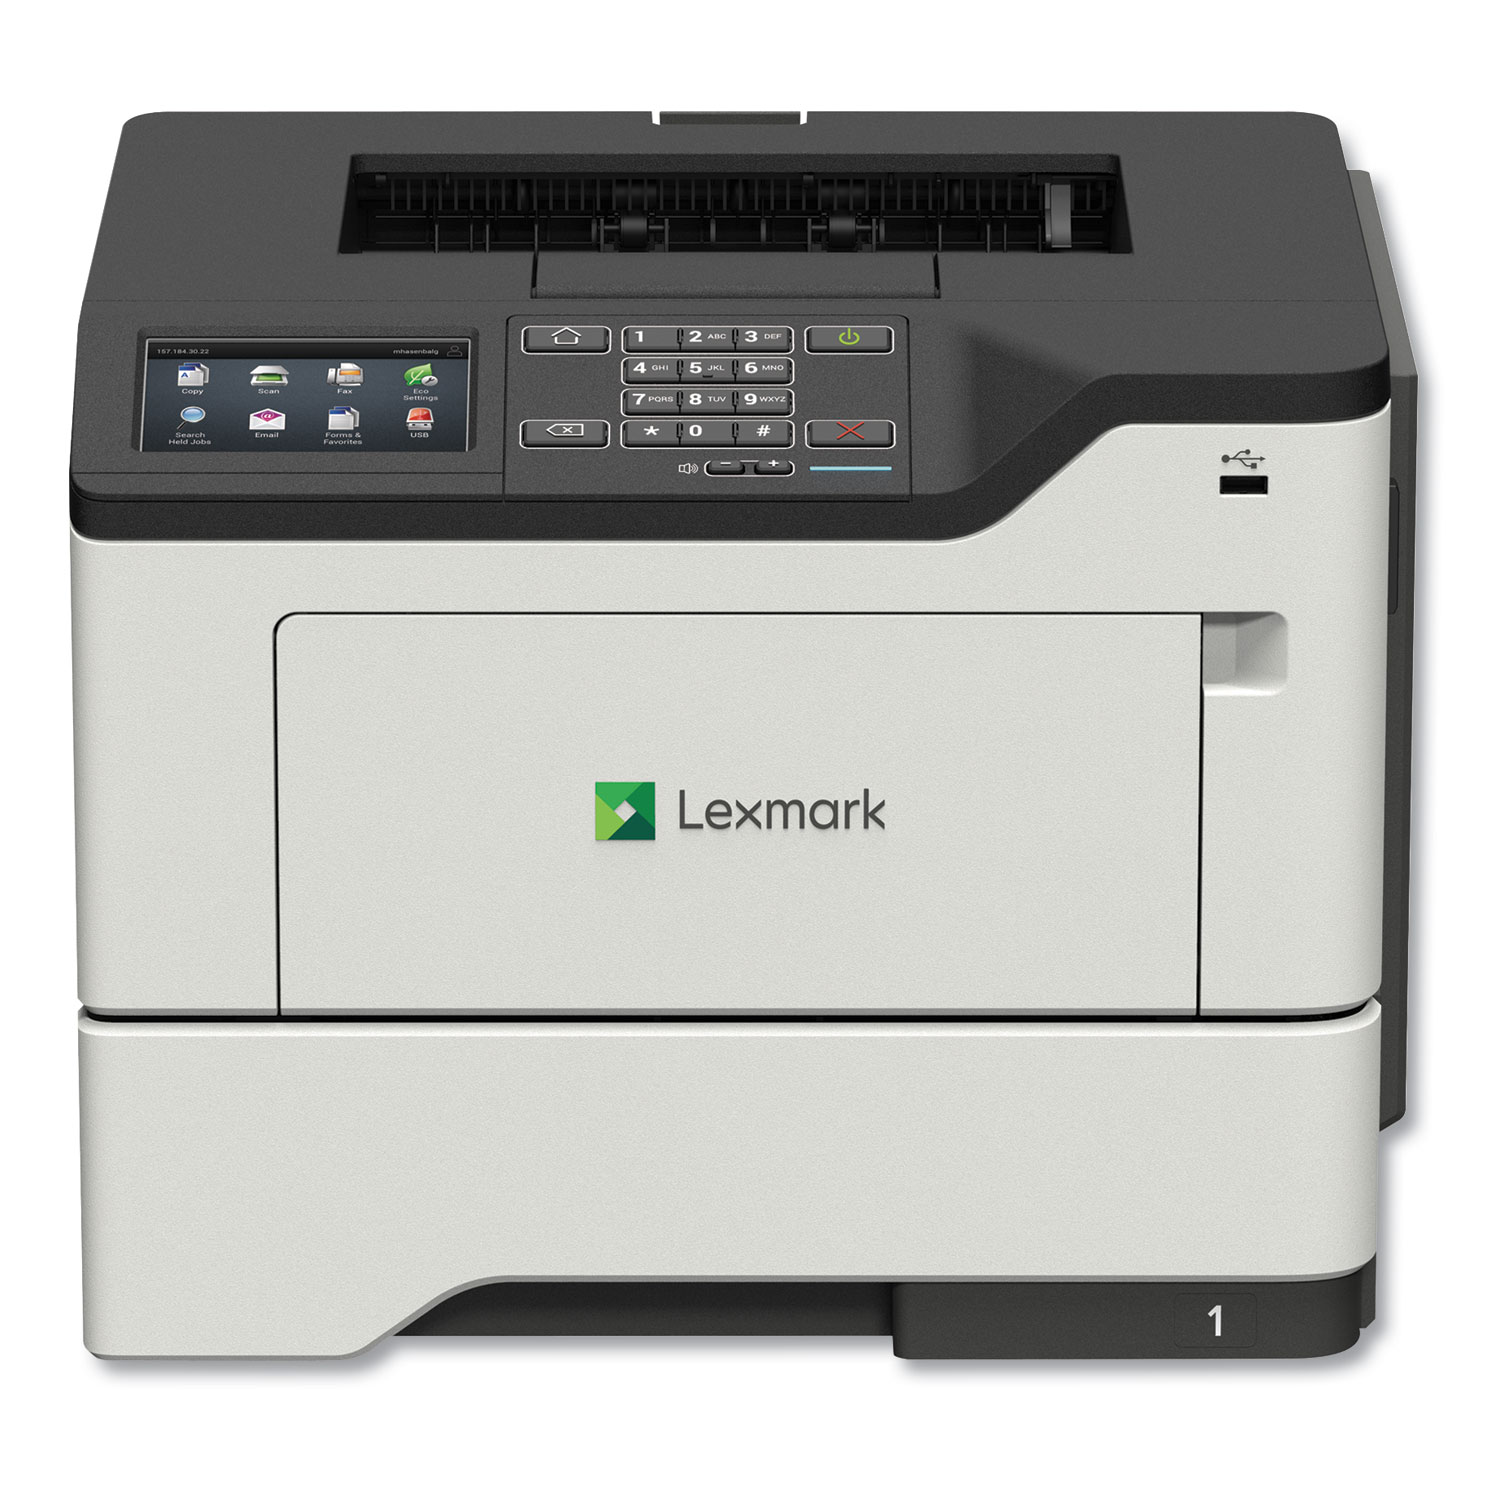  Lexmark 36S0500 MS622de Wireless Laser Printer (LEX36S0500) 